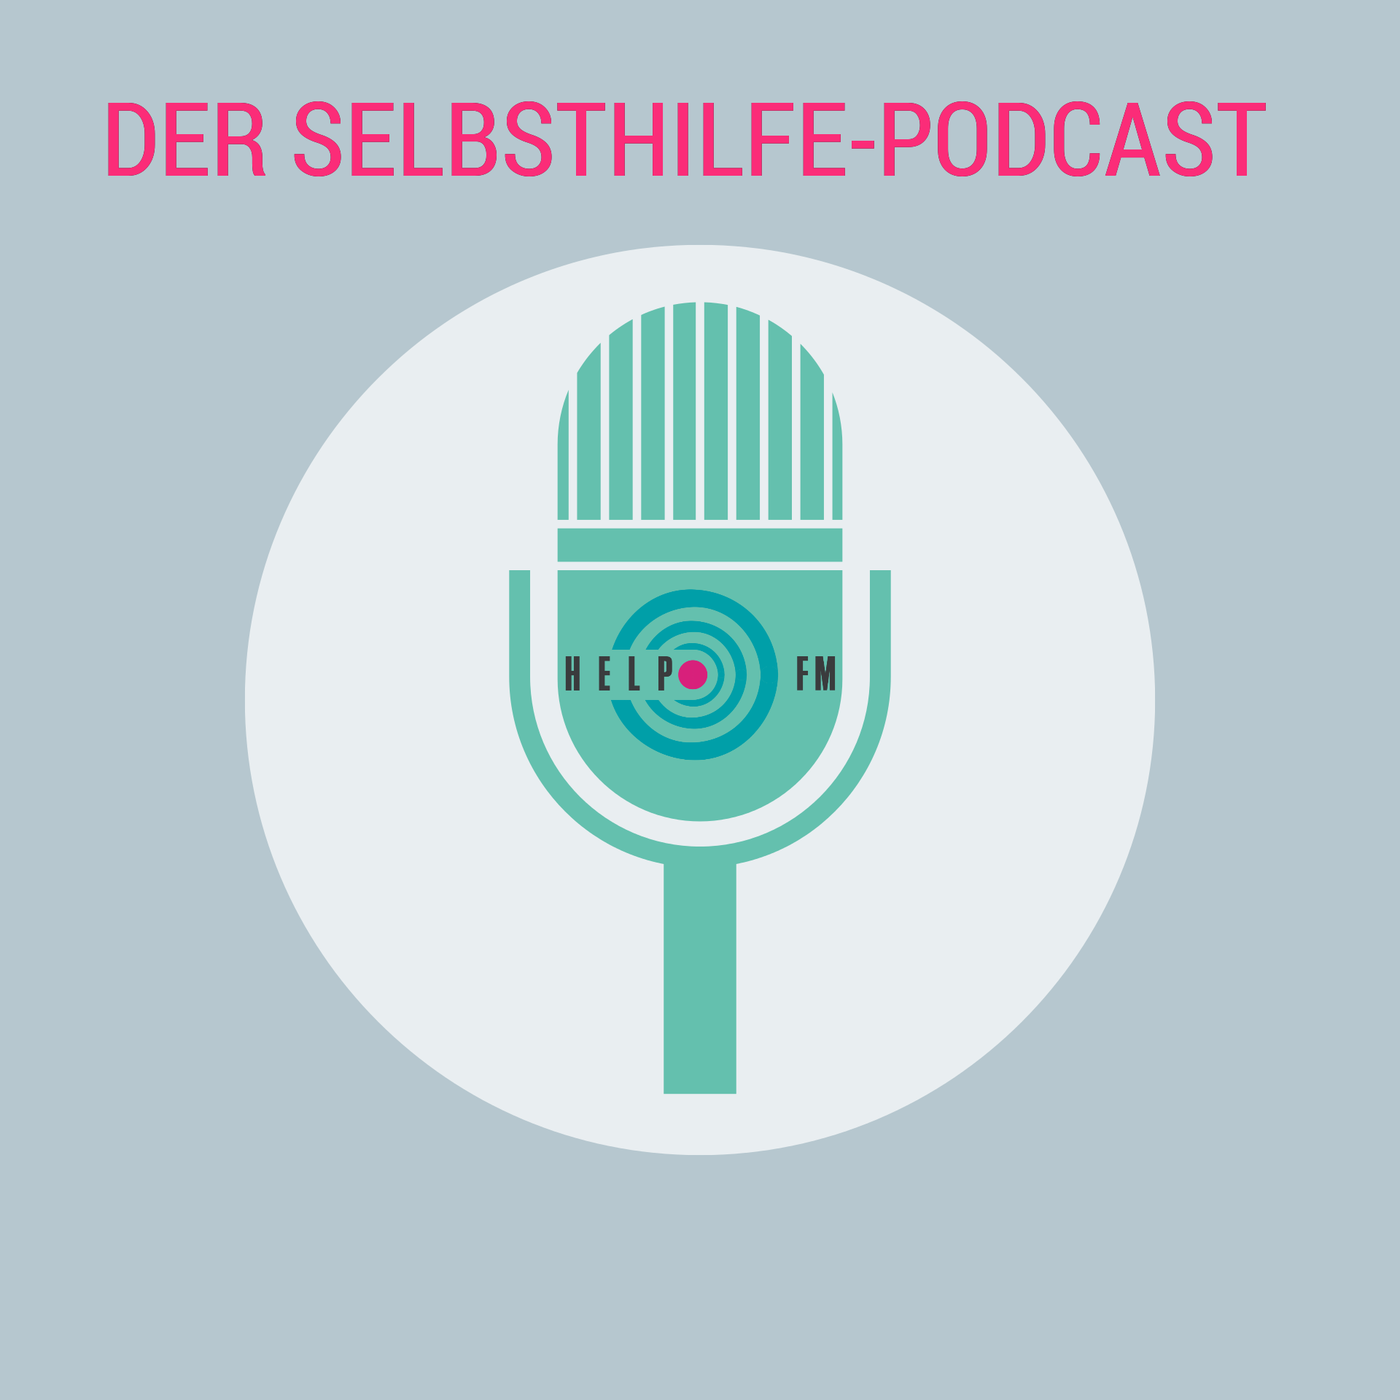 HELP FM - Der Selbsthilfe-Podcast